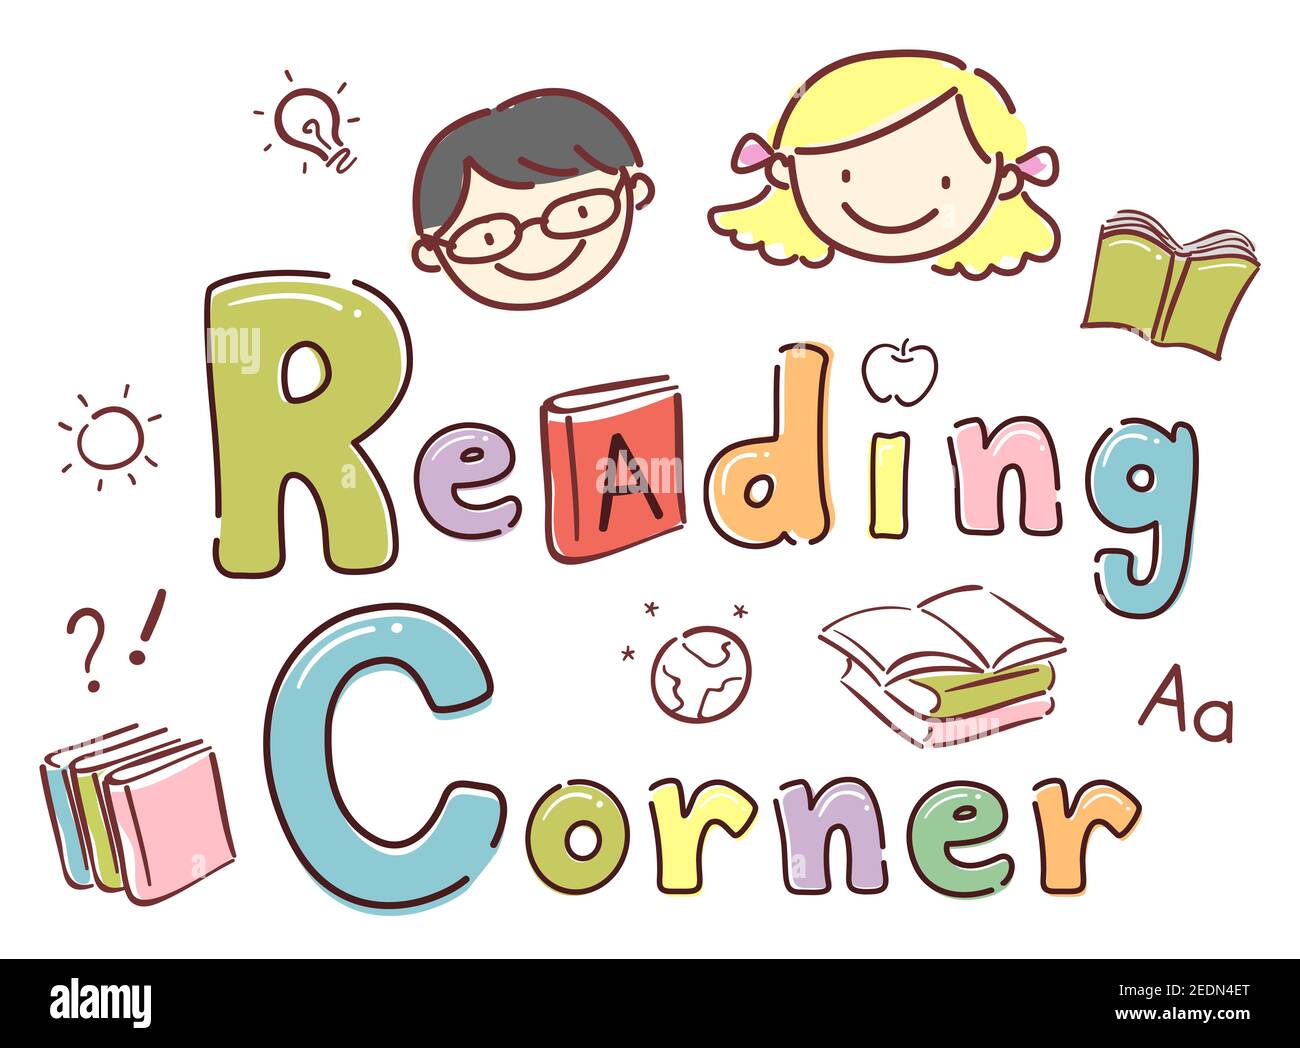 Reading Corner